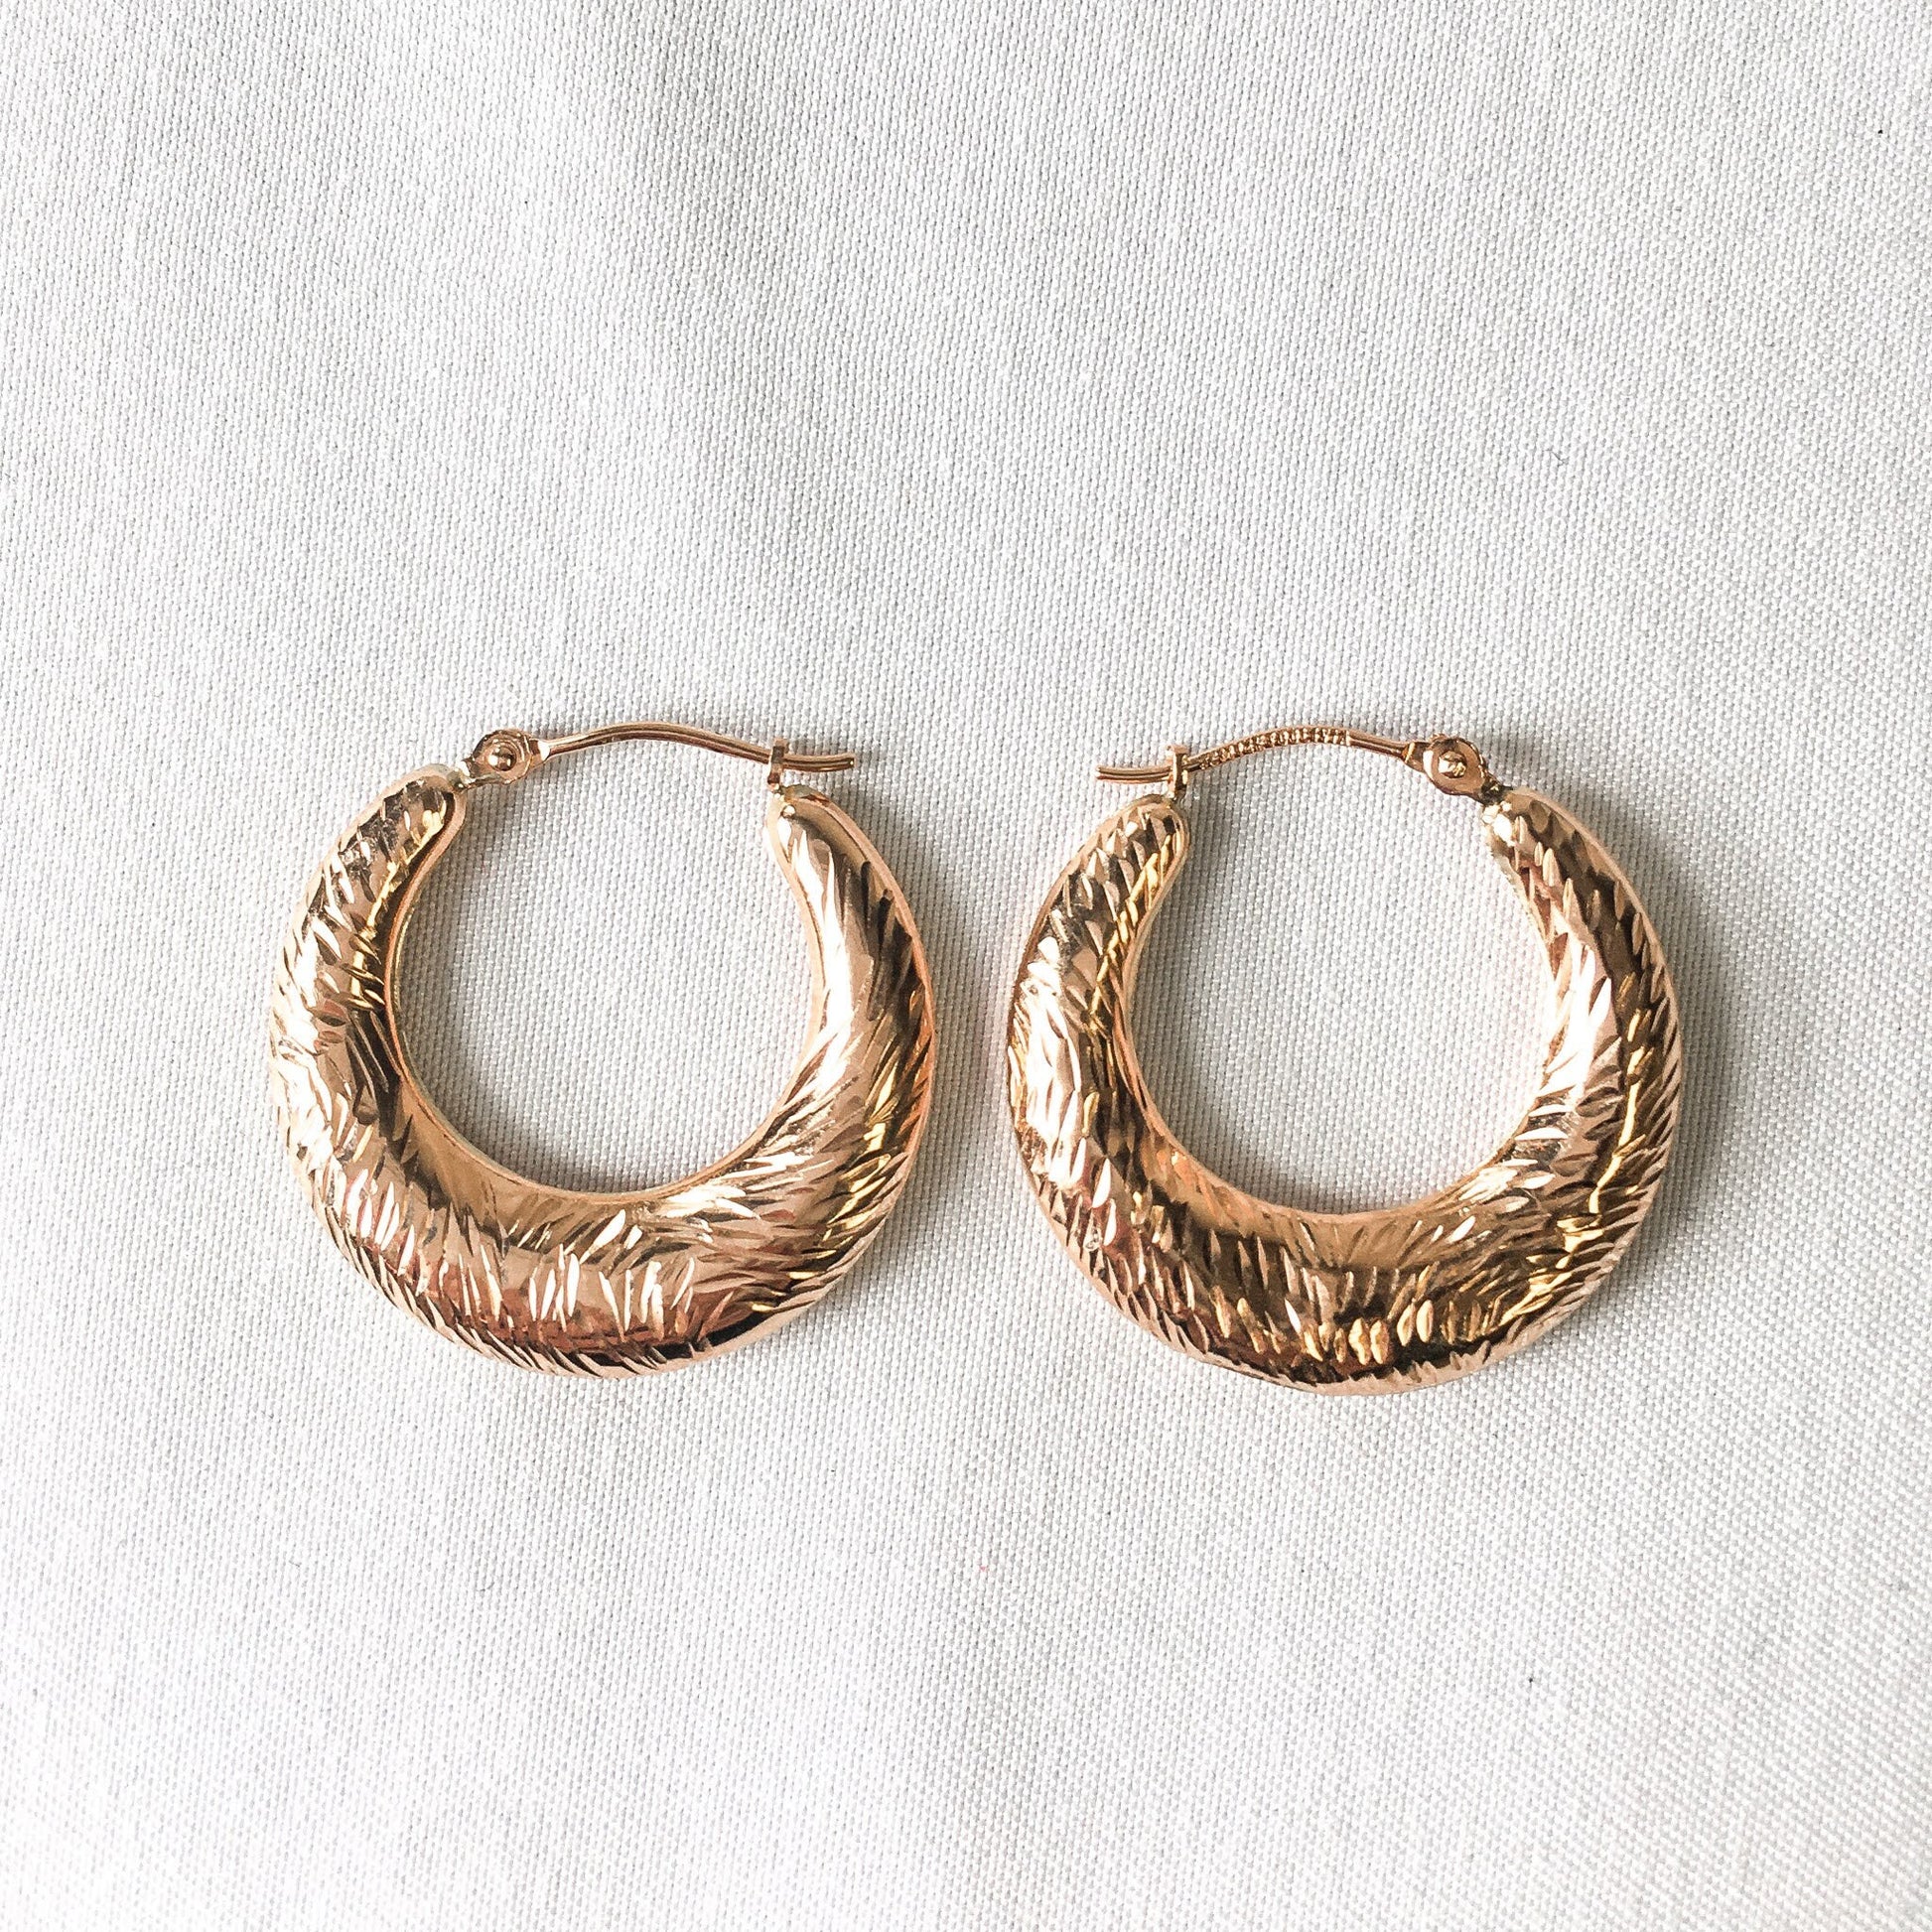 Vintage JCM Bolivia 14k Gold Textured Gold Hoop Earrings, Vintage Hoops